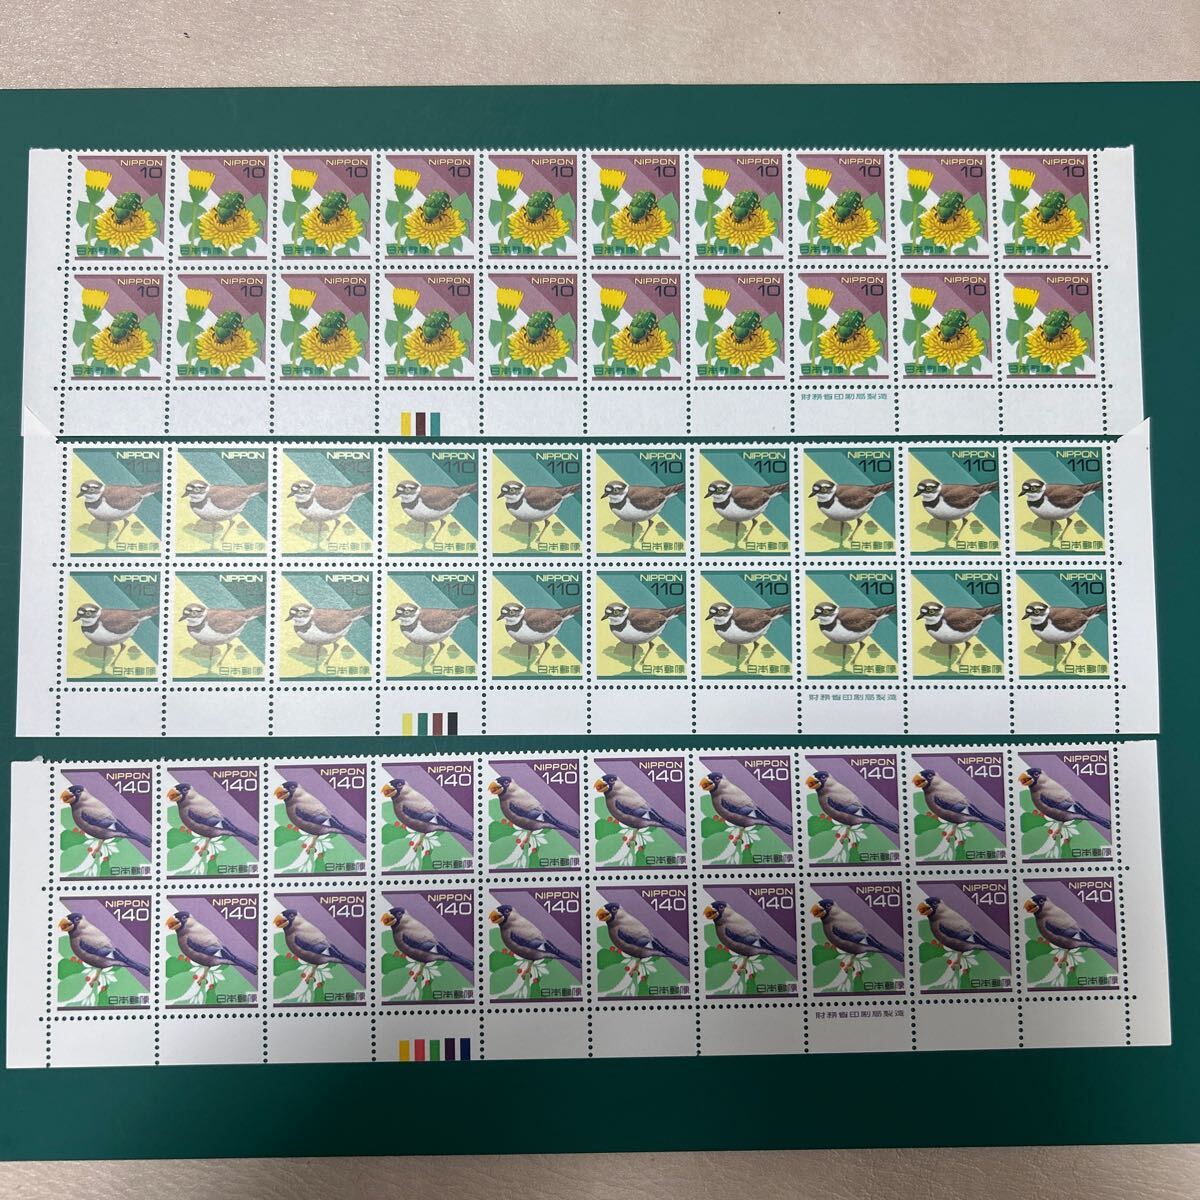  stamp 1994 year width length seat 10 jpy.110 jpy.140 jpy 